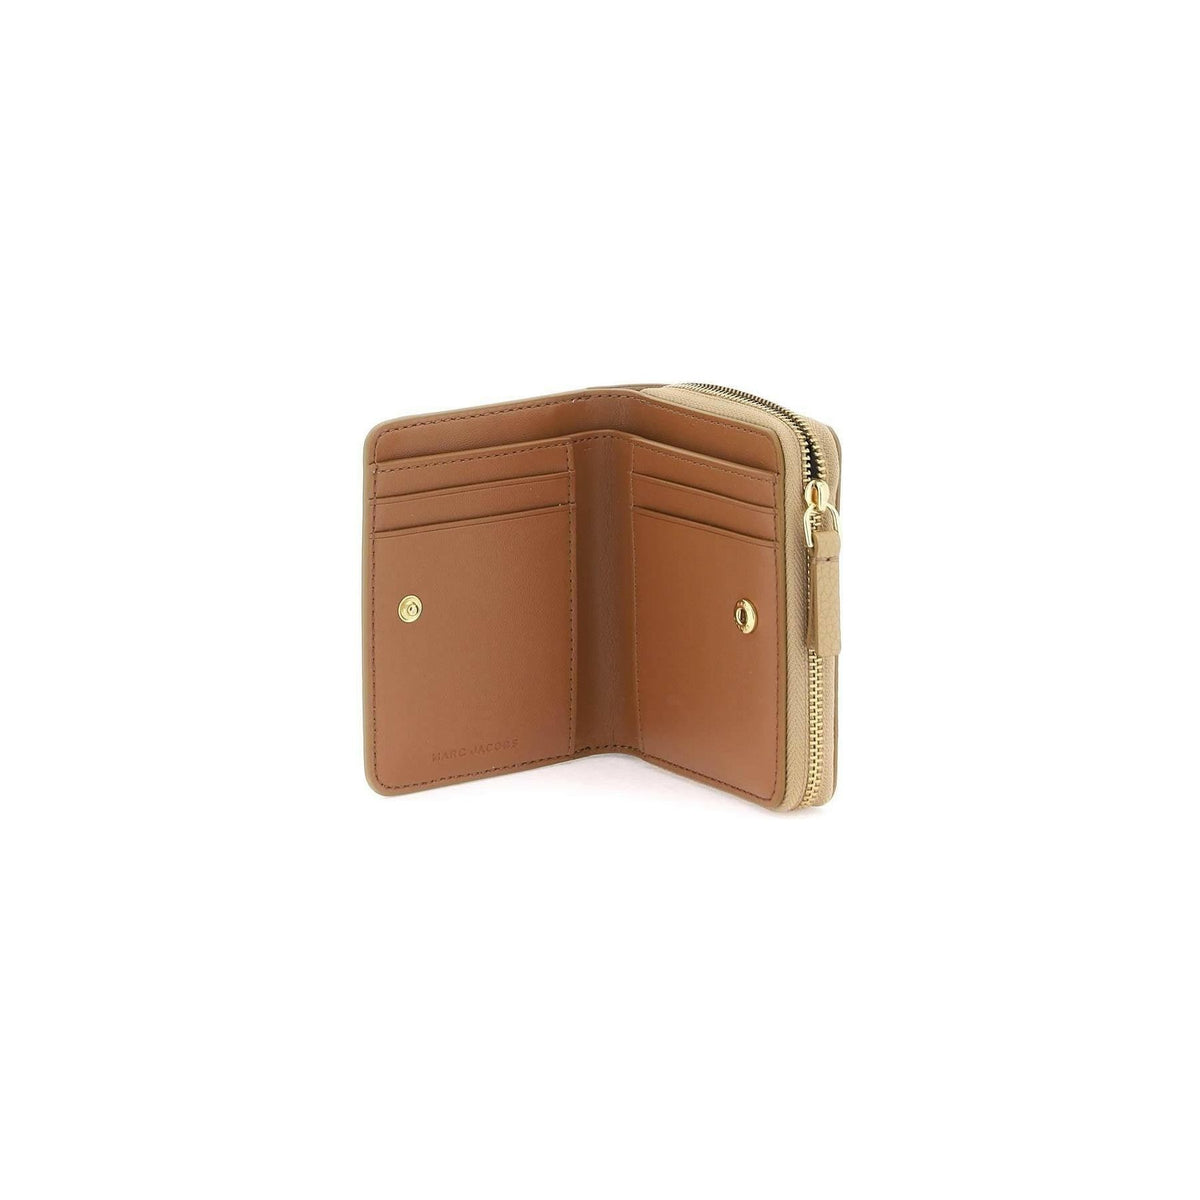 MARC JACOBS - The Leather Mini Compact Wallet - JOHN JULIA